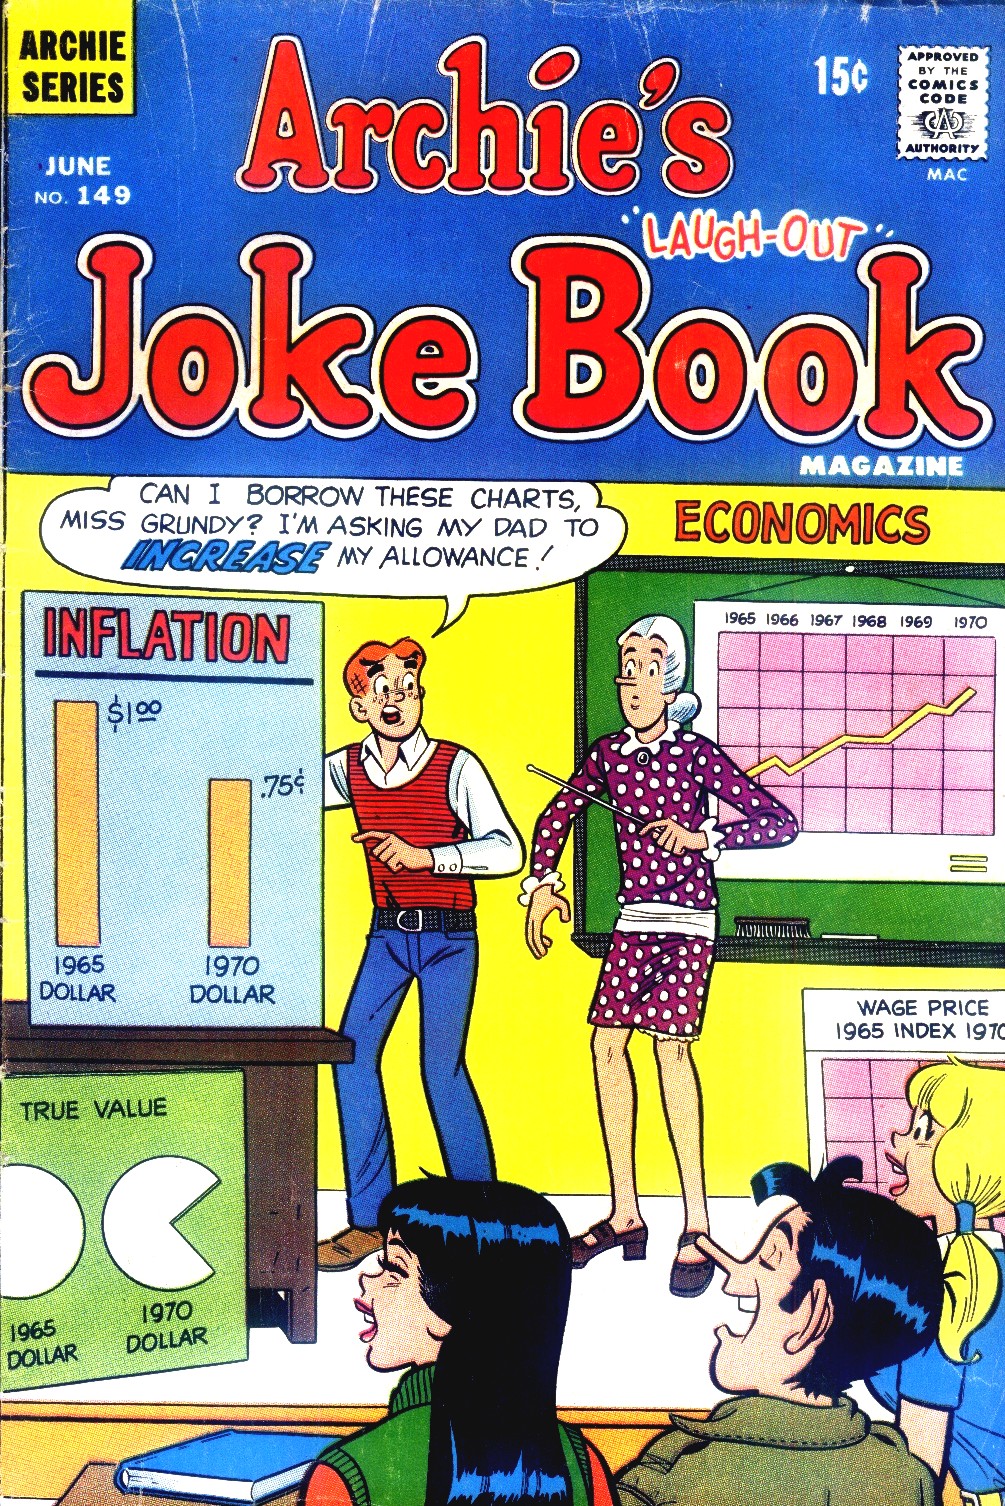 Archie's Joke Book Magazine issue 149 - Page 1